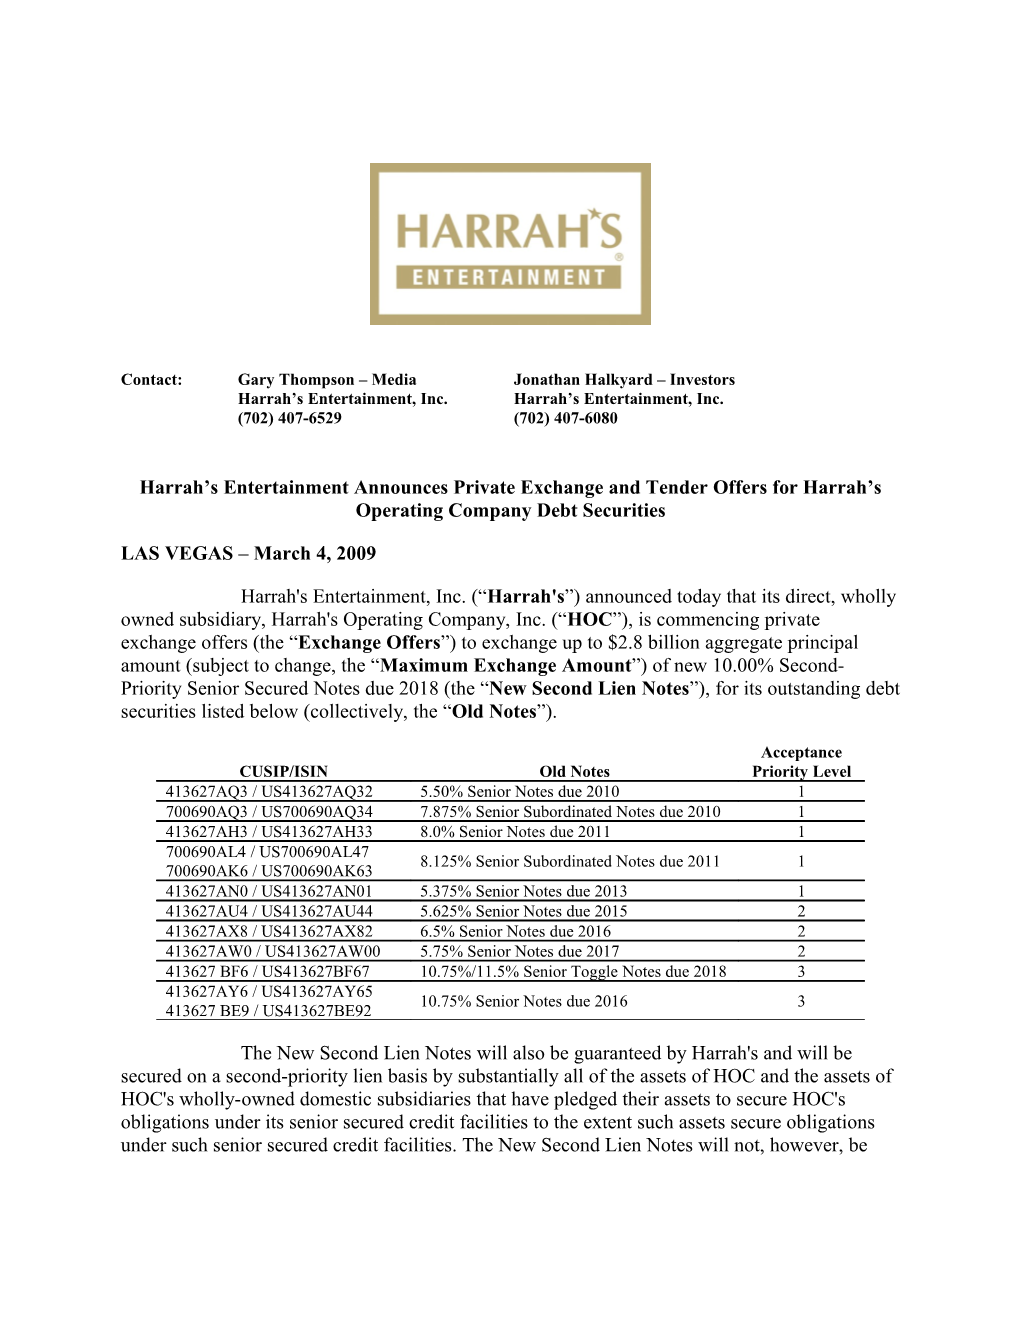 Harrah S Entertainment Announces Private Exchange and Tender Offersfor Harrah S Operating